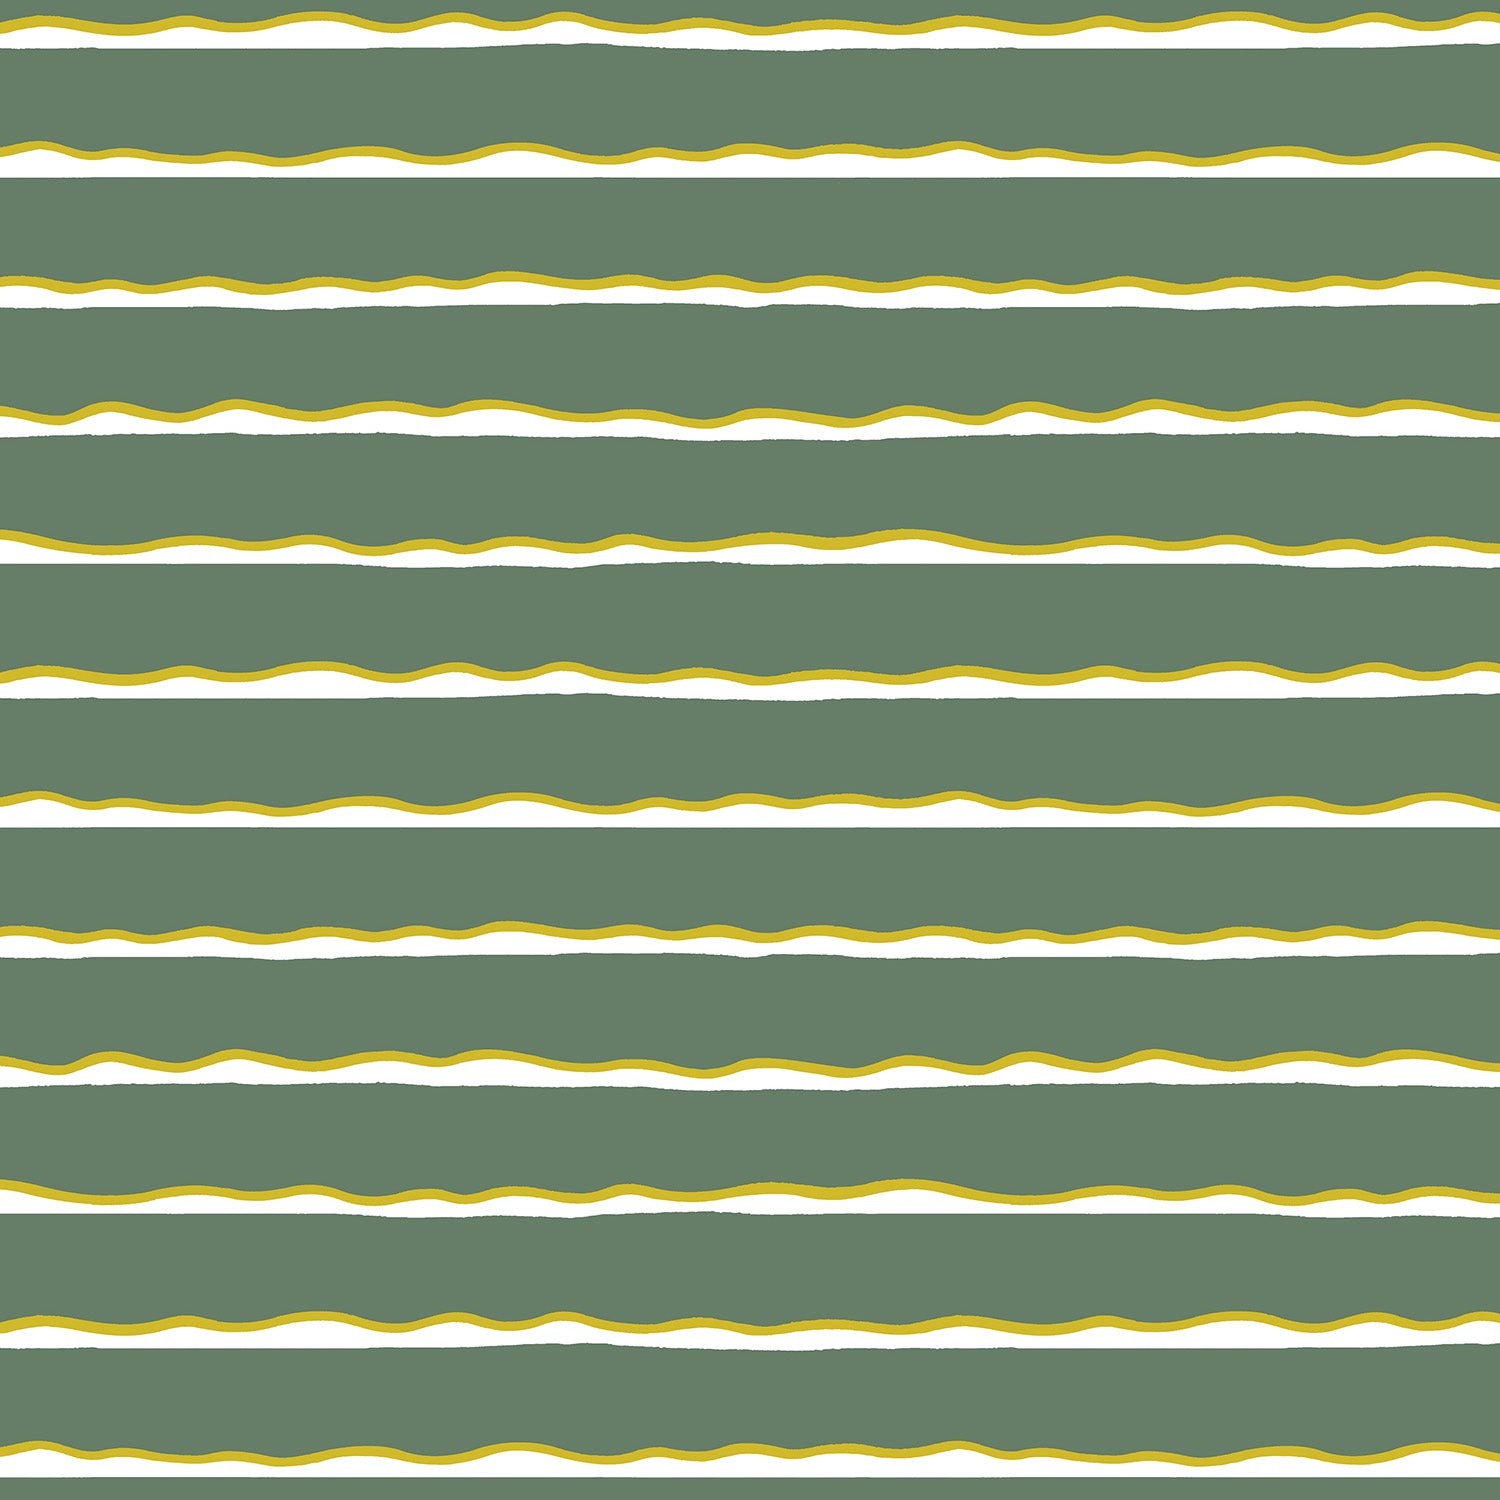 Detail of wallpaper in an undulating stripe pattern in mustard, white and sage.